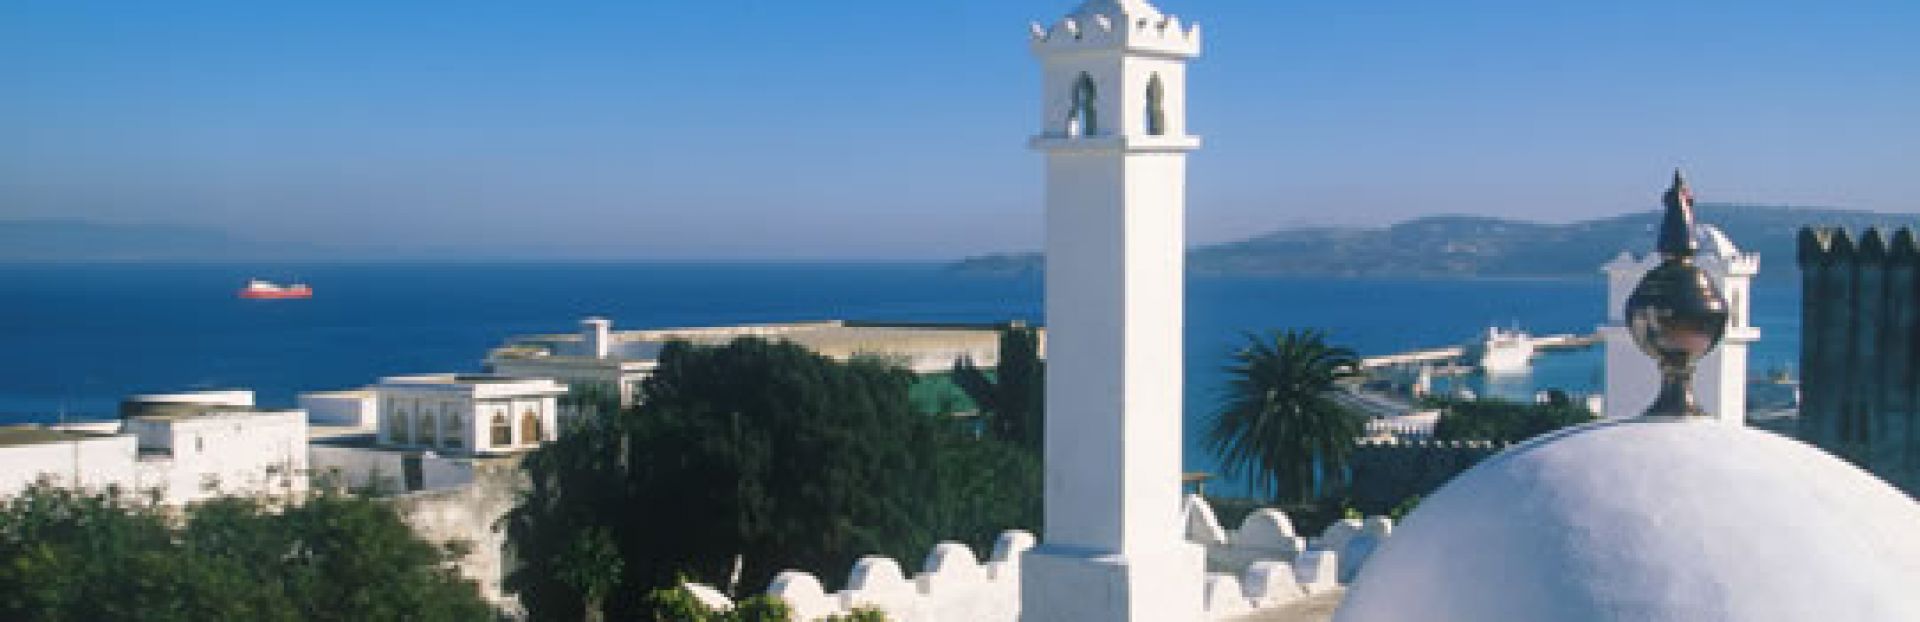 RIU Tikida Palace Agadir 5* - ALL INCLUSIVE почивка в Агадир